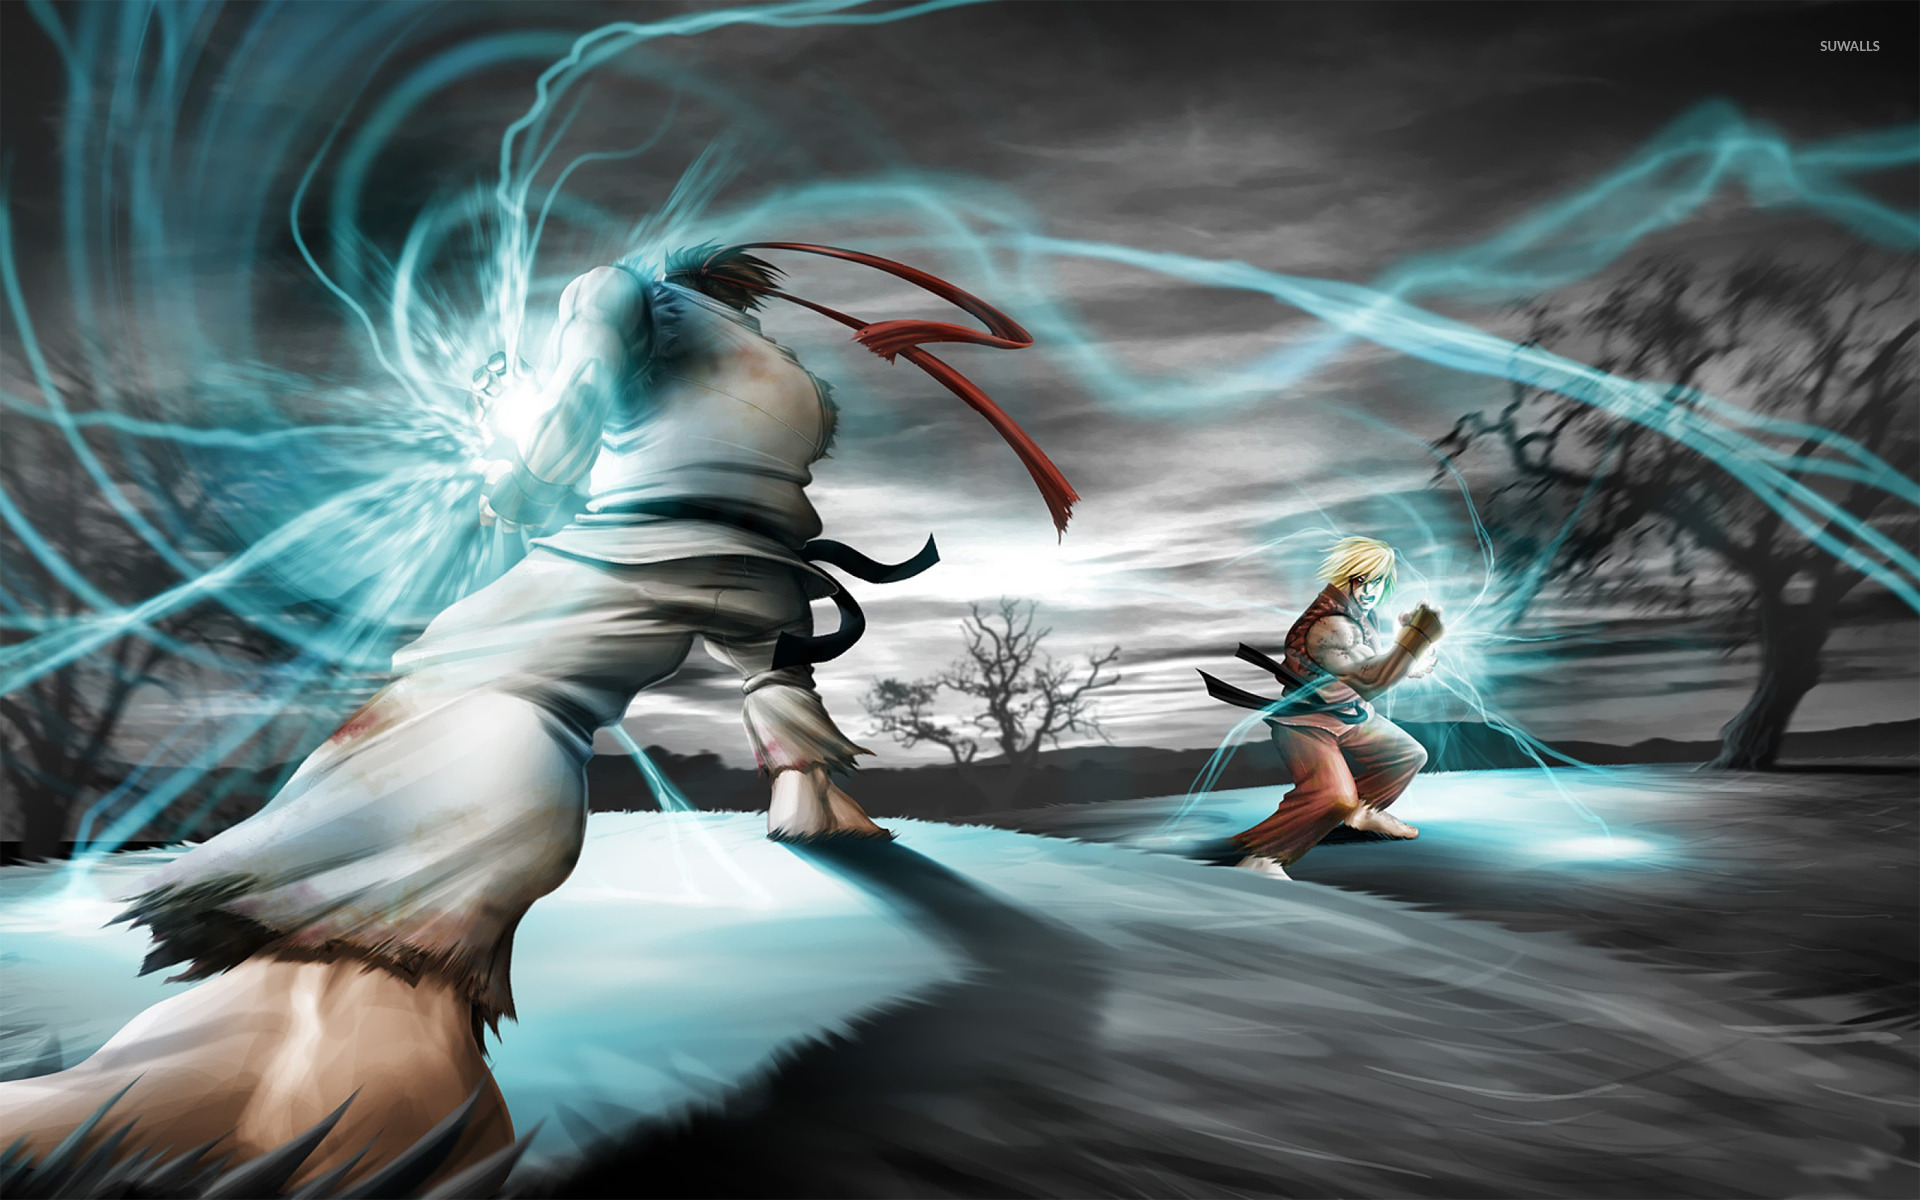 ryu street fighter wallpaper,cg artwork,illustration,fictional character,mythology,games